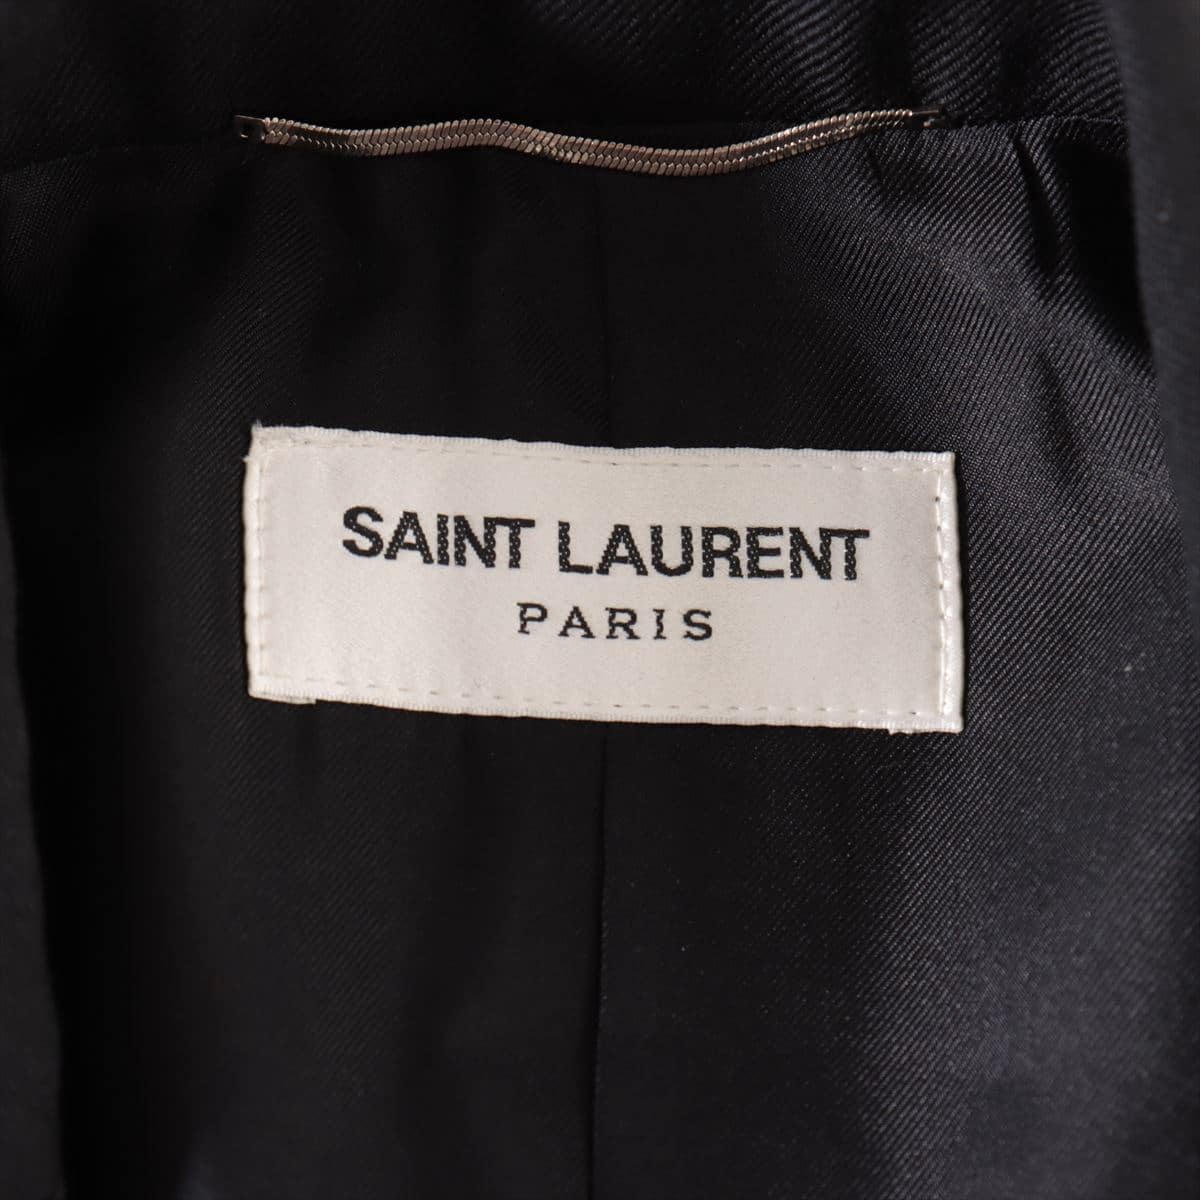 Saint Laurent Paris 20 years Wool Setup 44 Men's Black